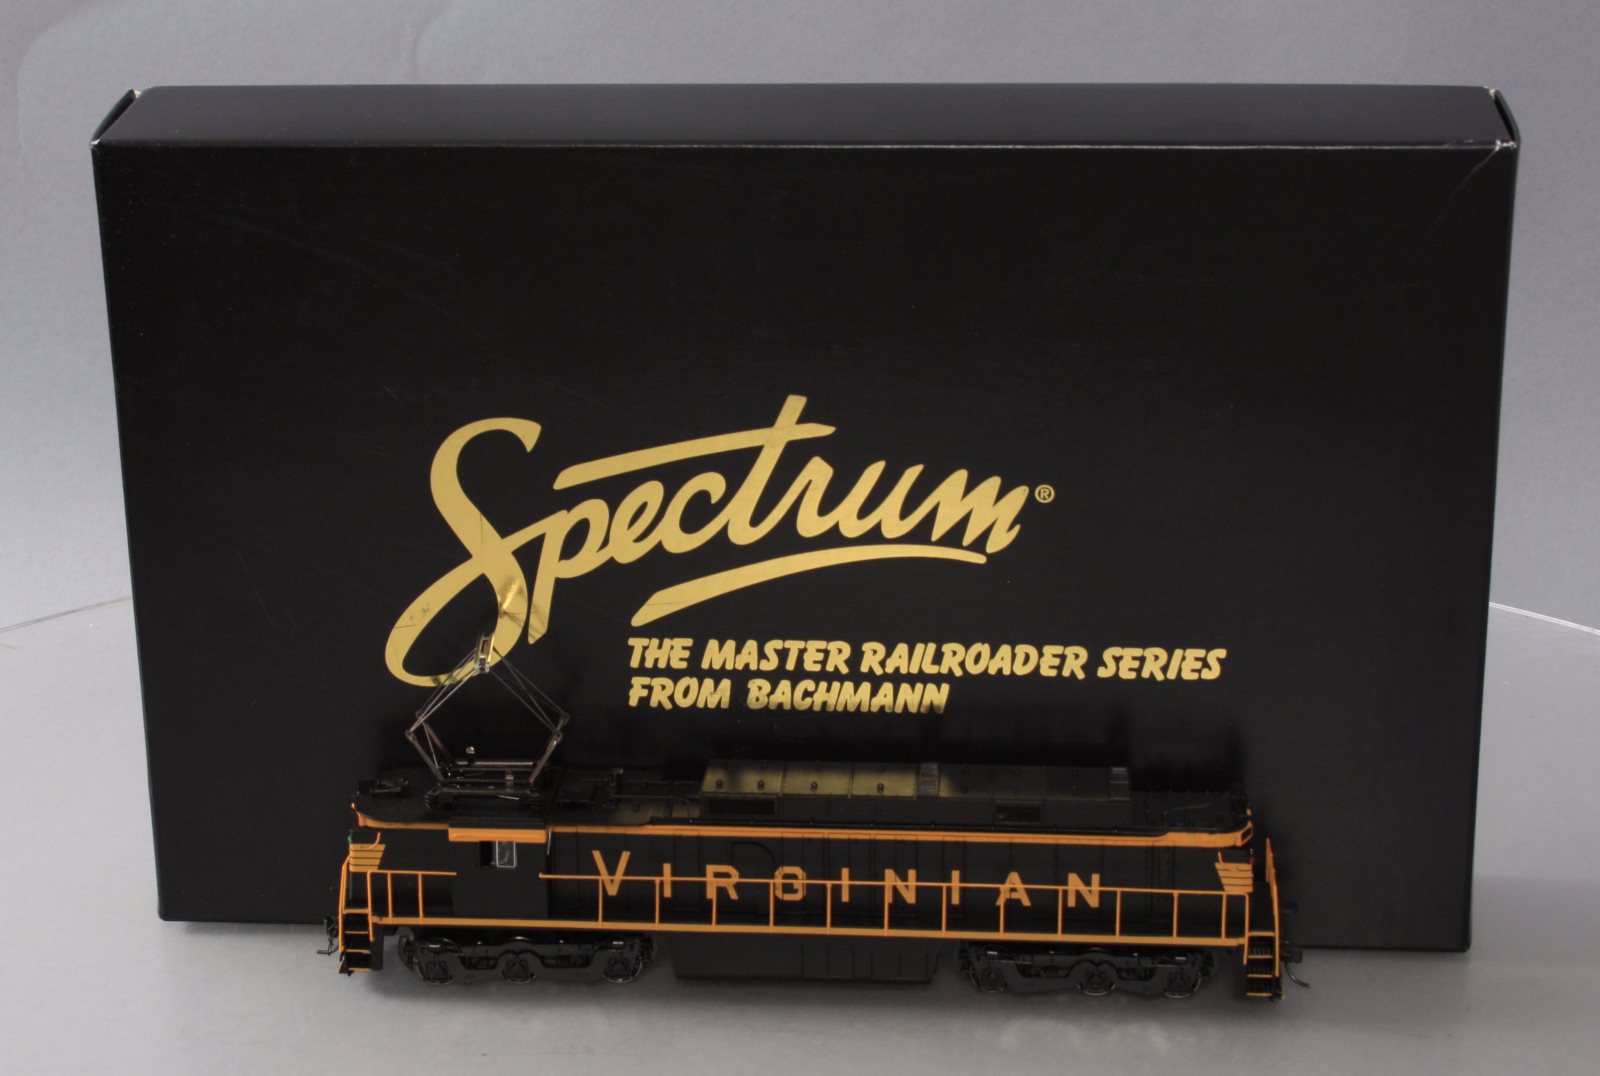 Bachmann 82402 HO Virginian E33 Electric Locomotive #140